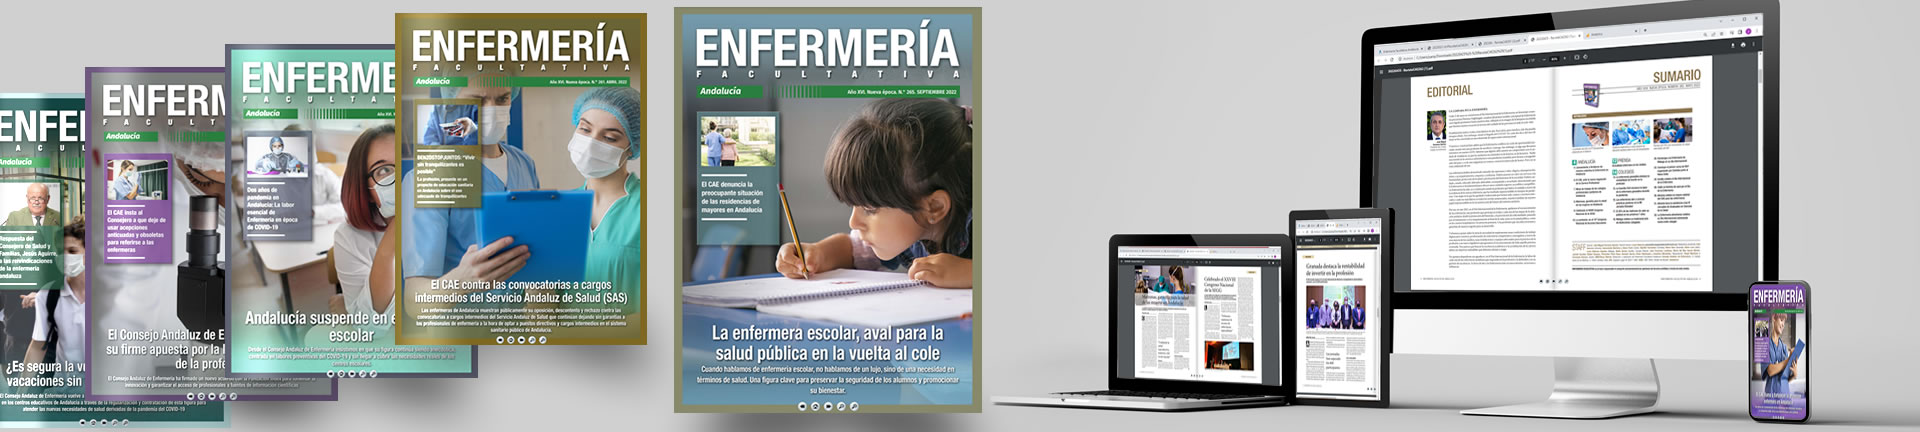 Consejo Andaluz de Colegios de Enfermería - CAE - Revista Enfermería Facultativa número 265 - Edición Andalucía